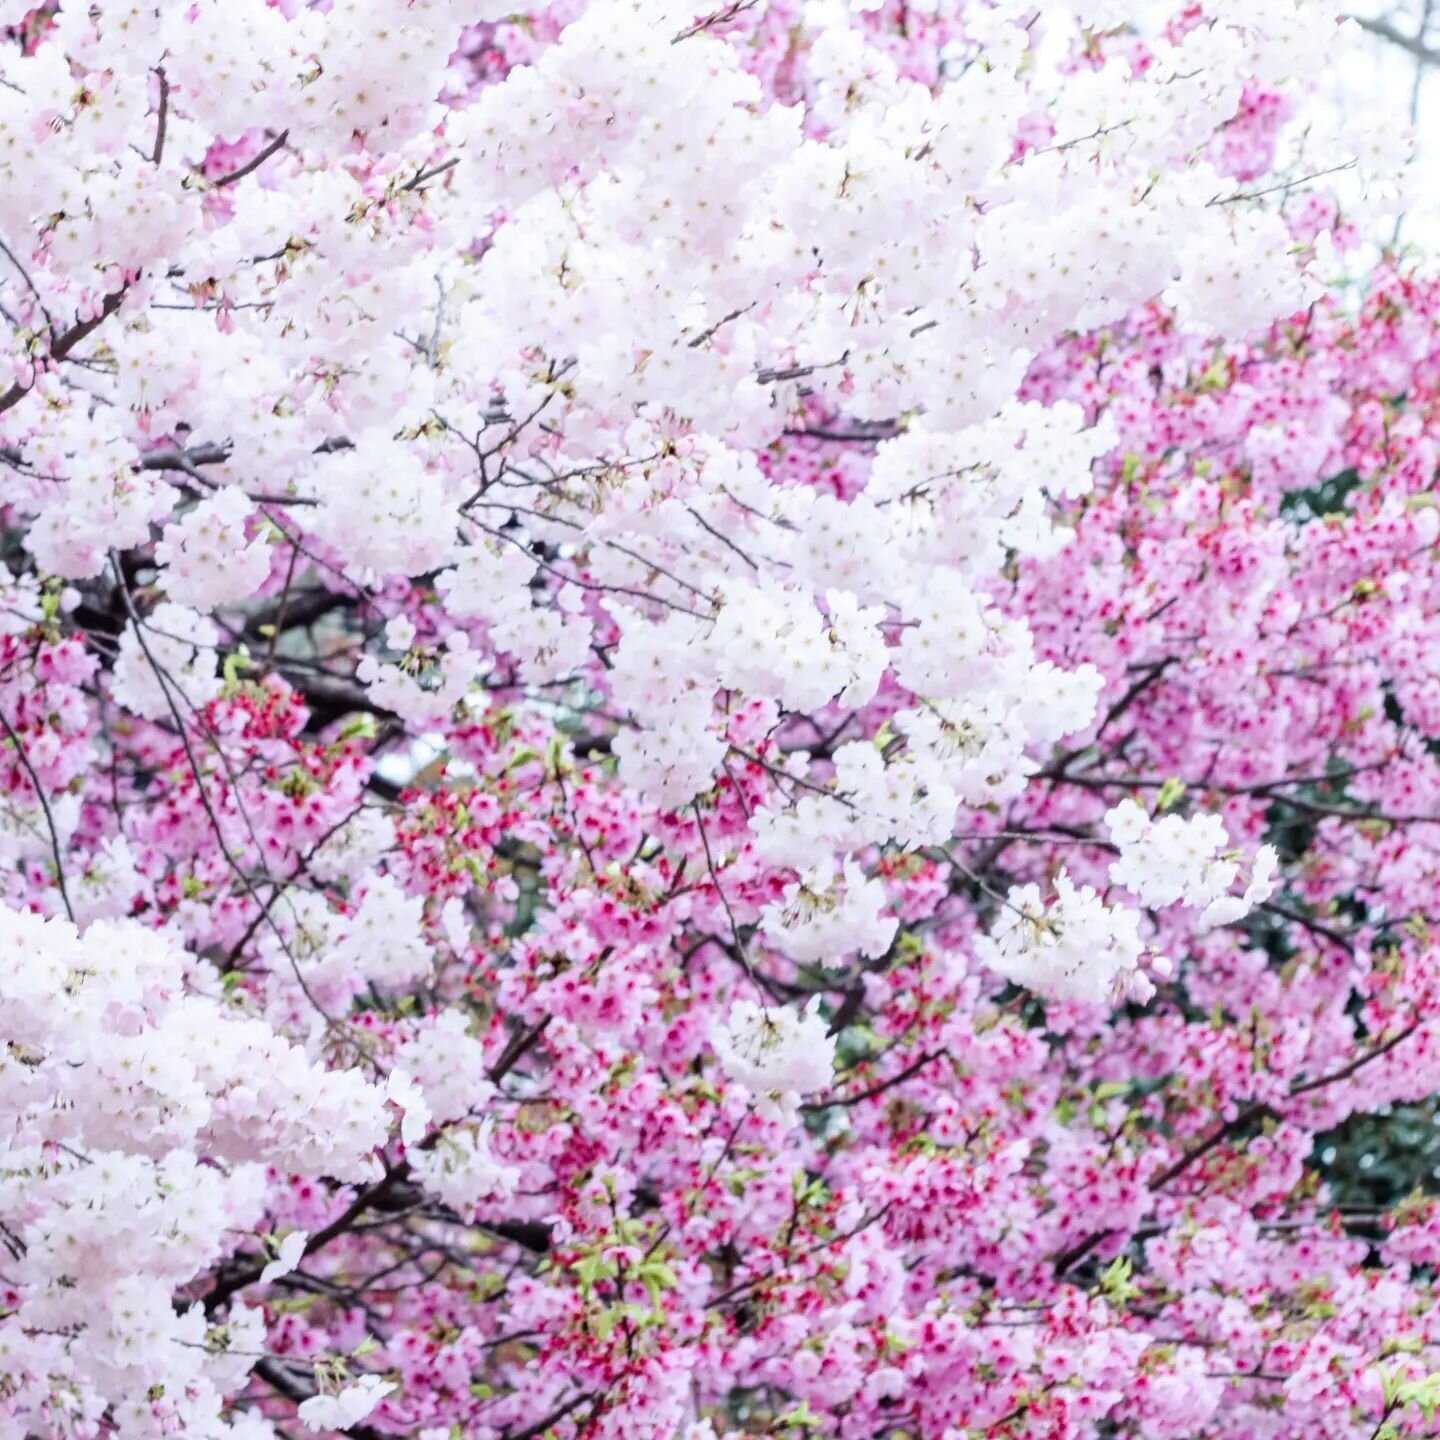 Spring is nature's way of reminding us that new beginnings are always possible 🌸🌼🔒

#sakura #shinjukugyoennationalgarden #tokyo #cherryblossom #bloomingflowers